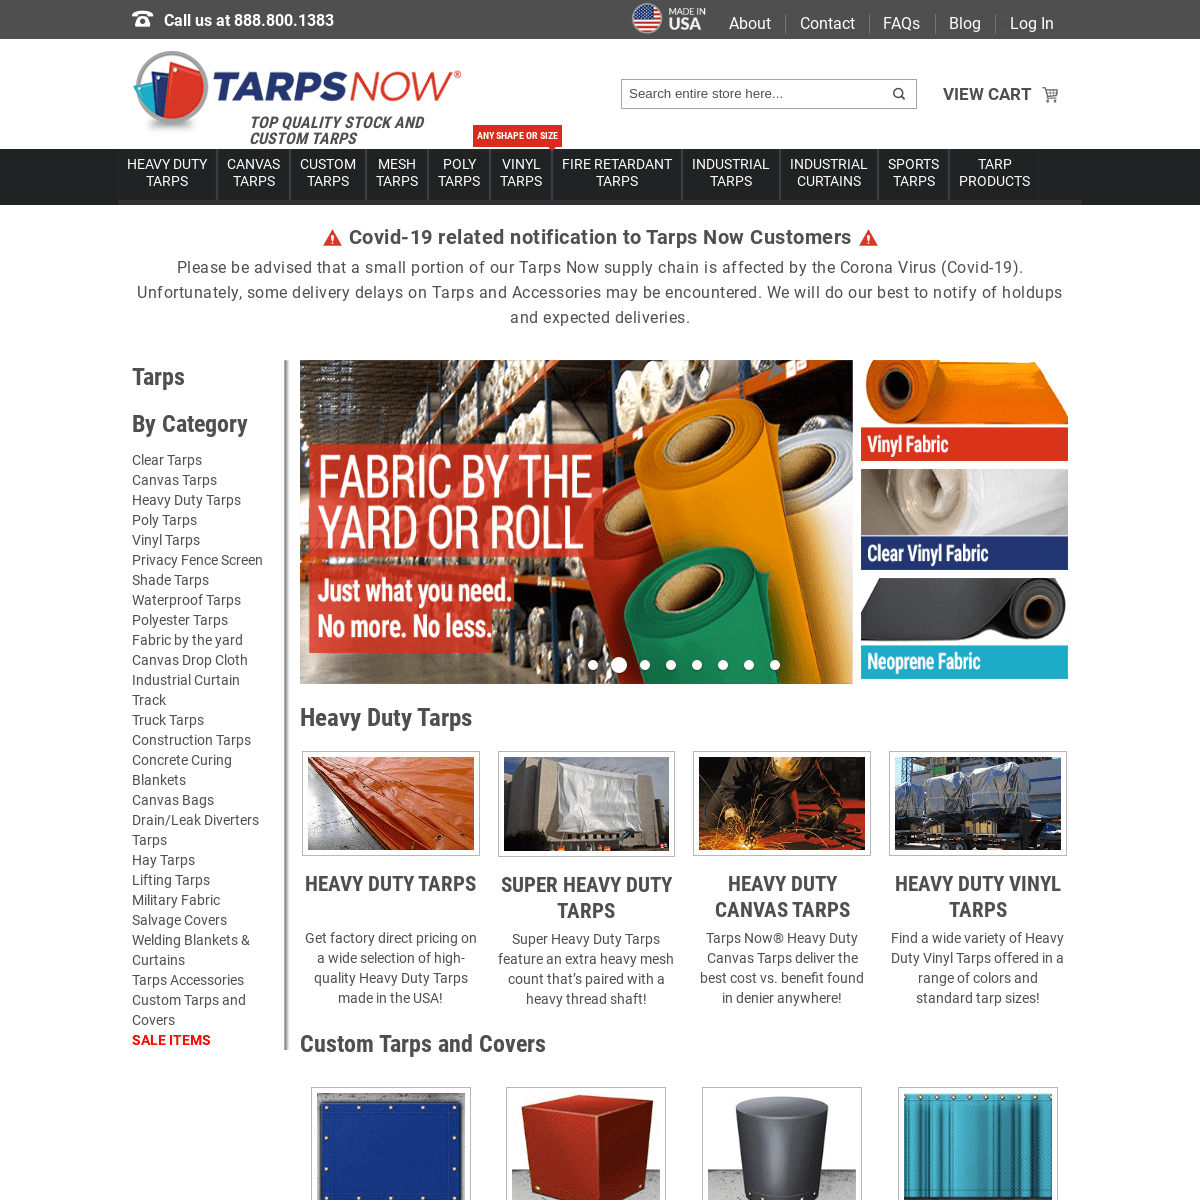 A complete backup of tarpsnow.com